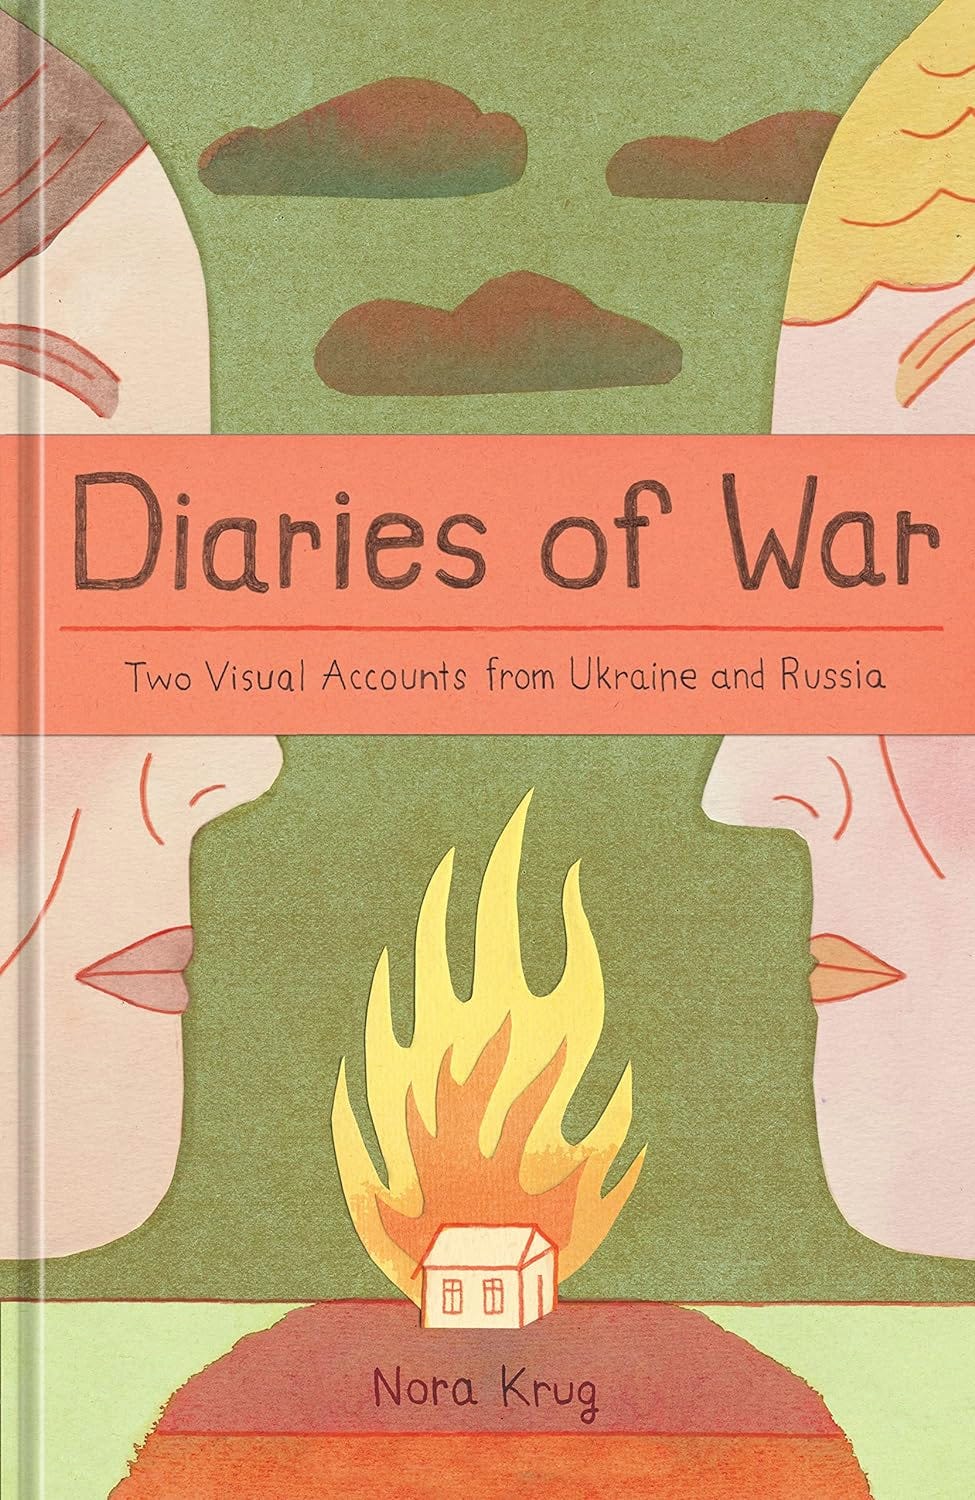 Illustrative book cover of "Diaries of War"